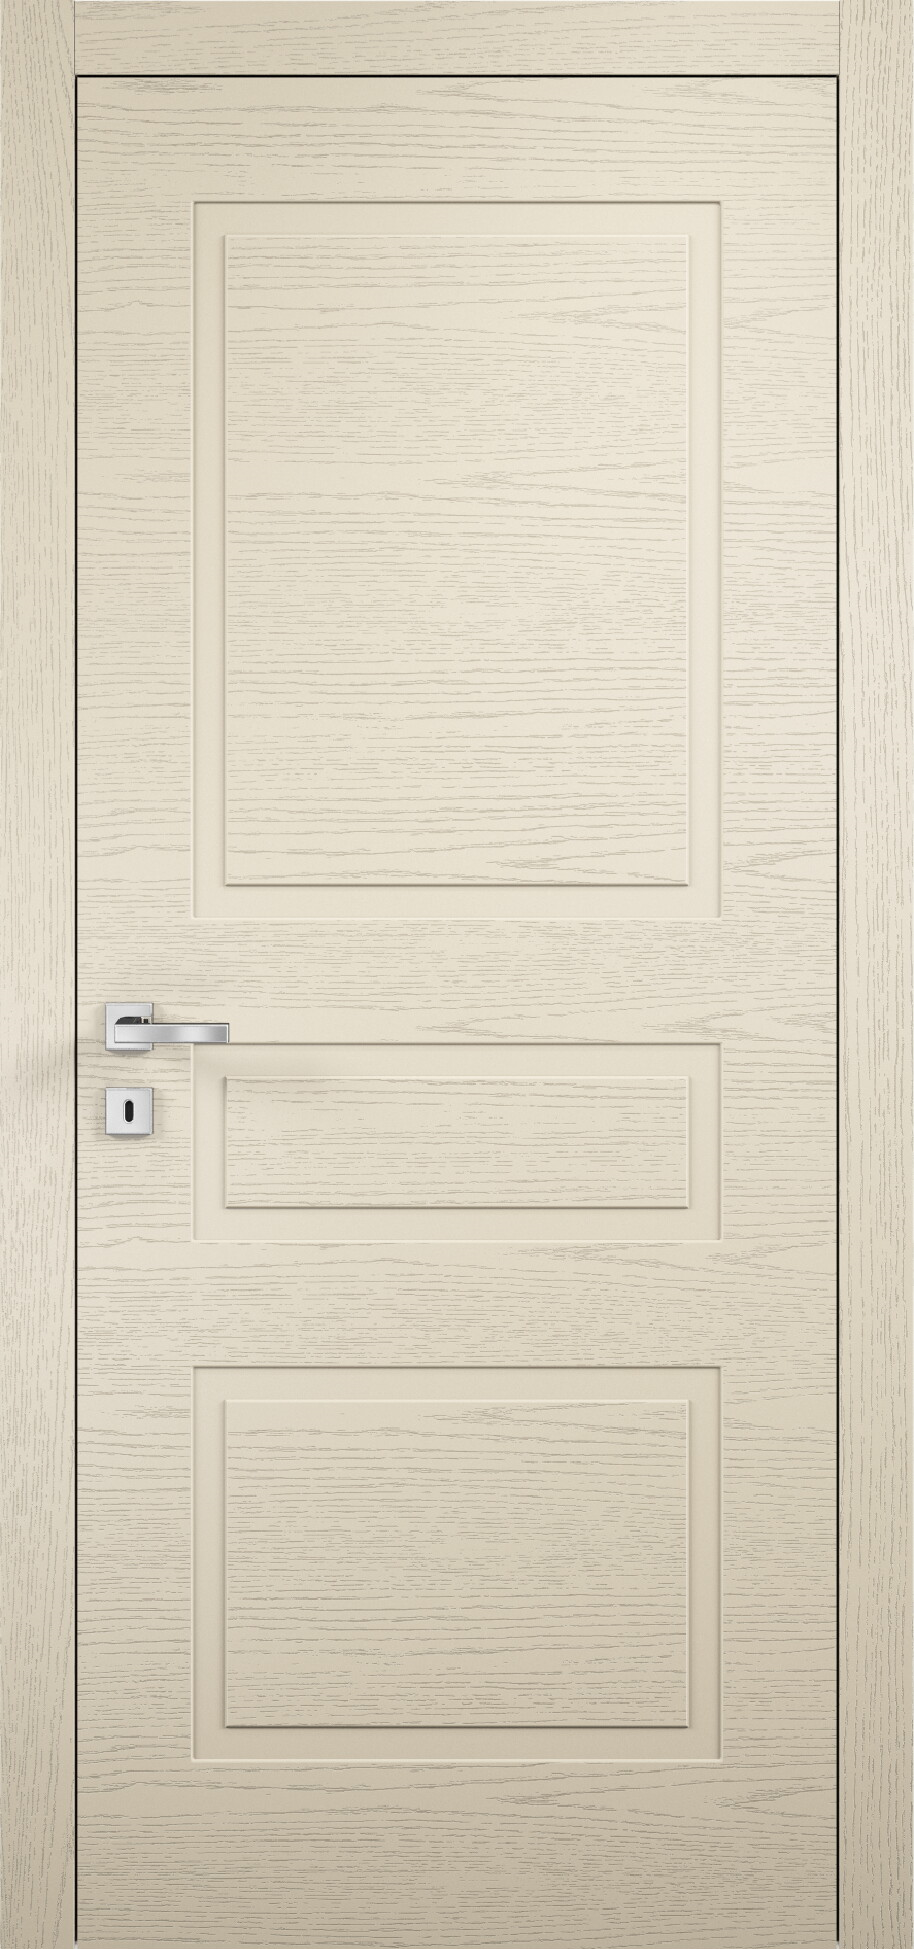 межкомнатные двери эмалированная межкомнатная дверь glamour 103 эмаль аворио